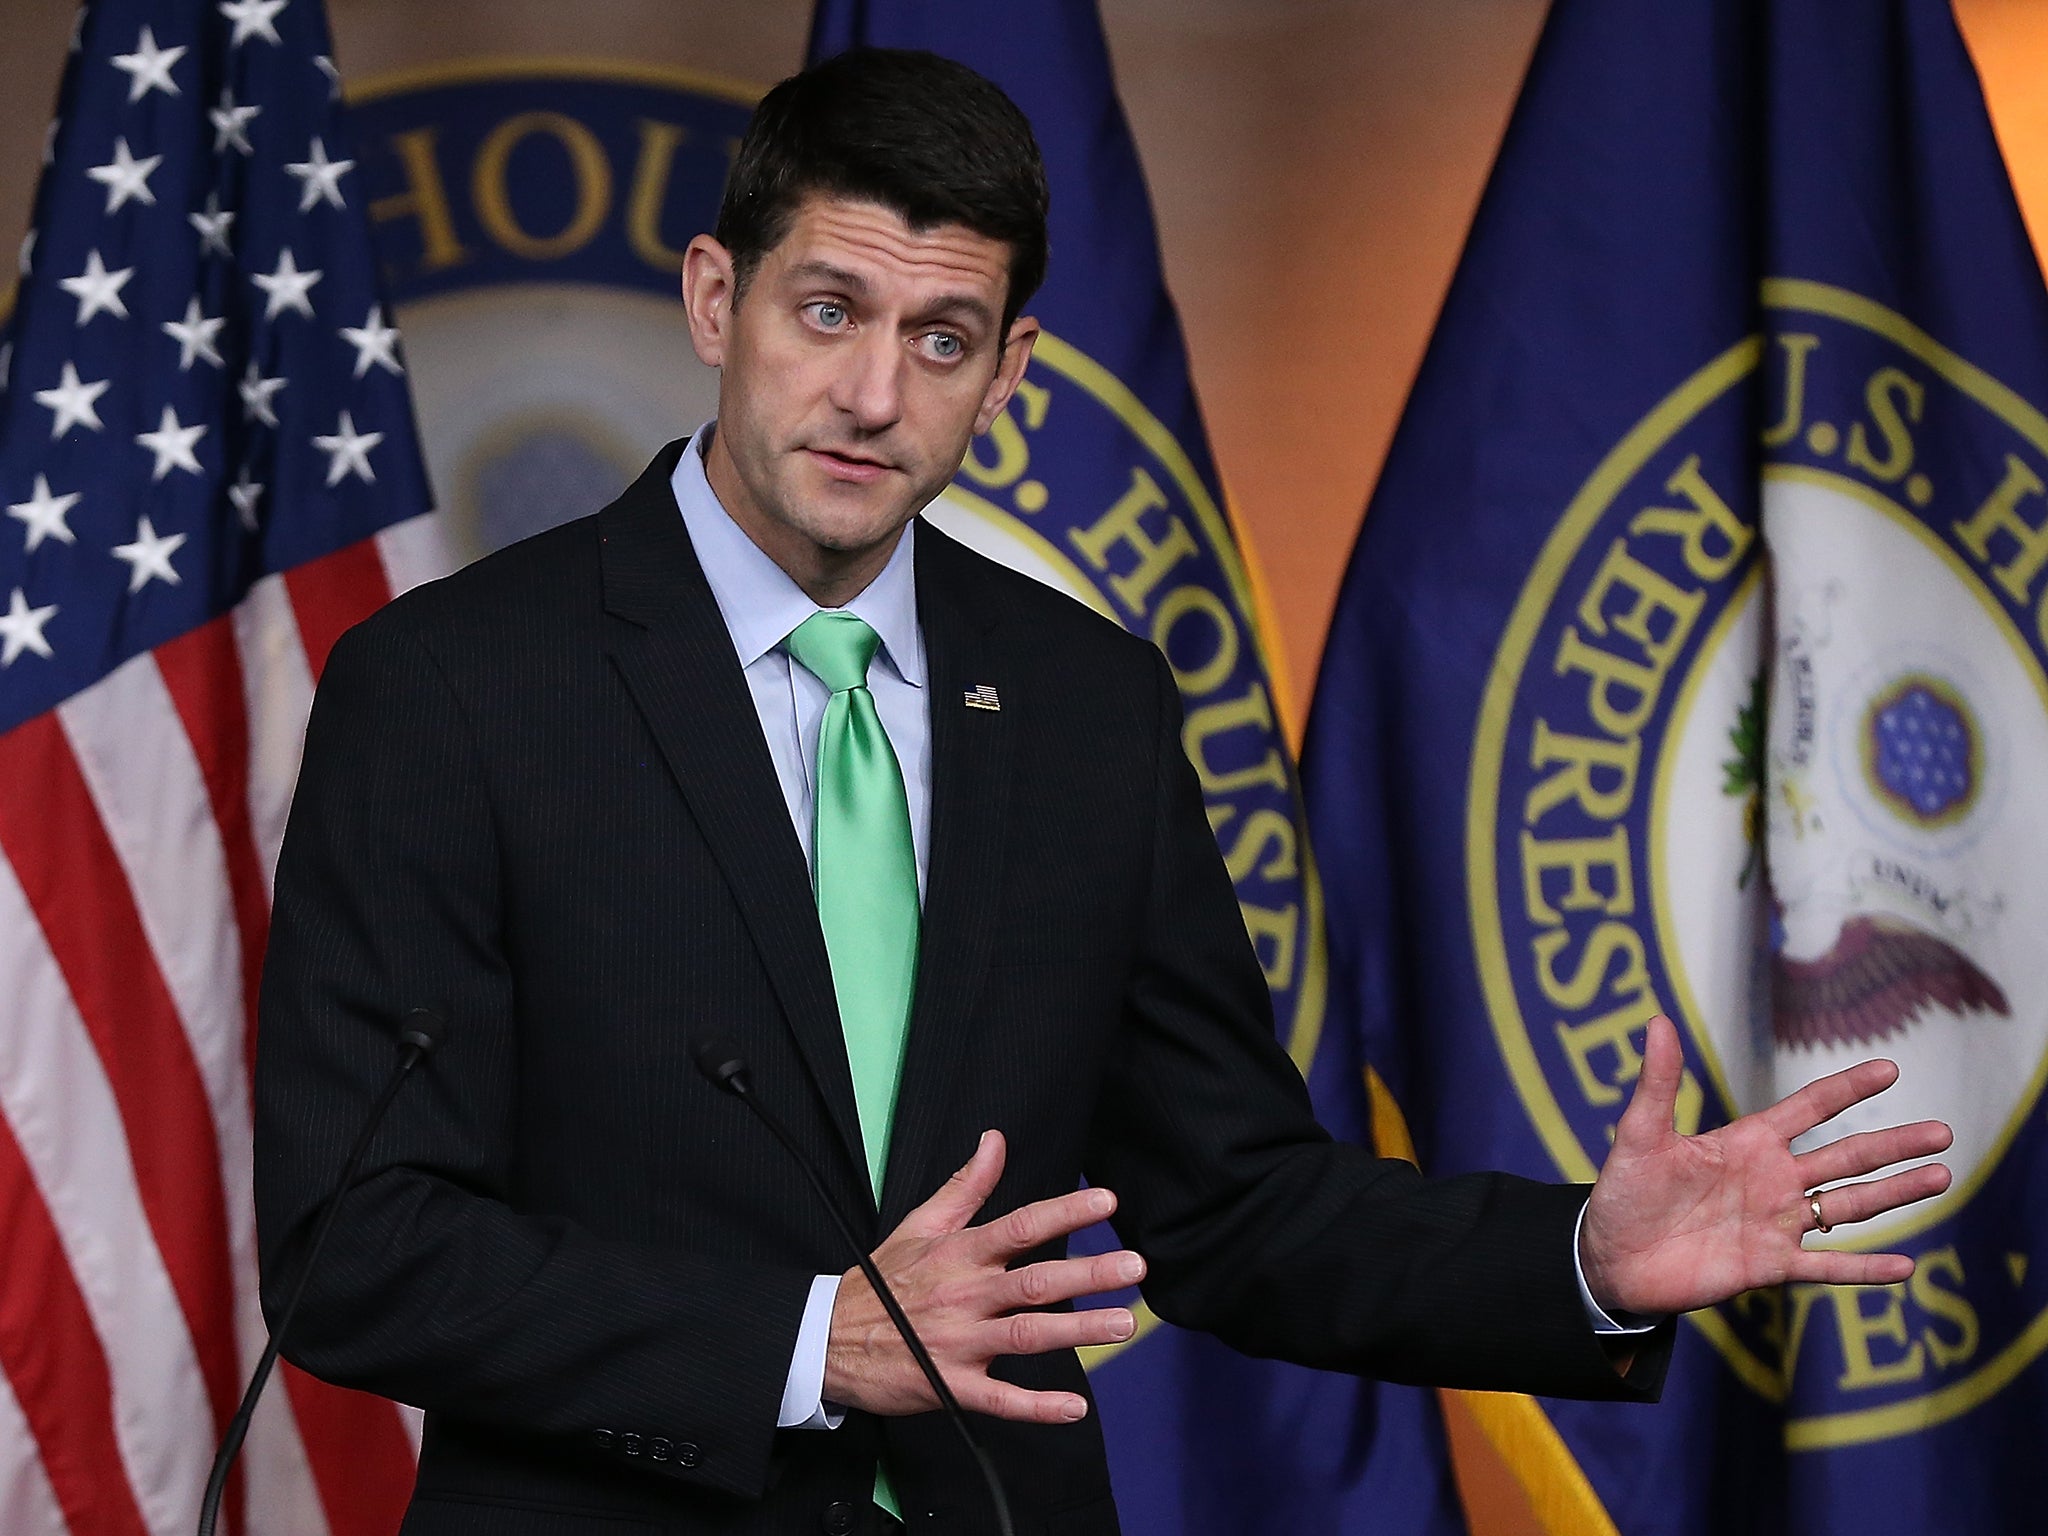 House Speaker Paul Ryan told members they must abide by the dress code